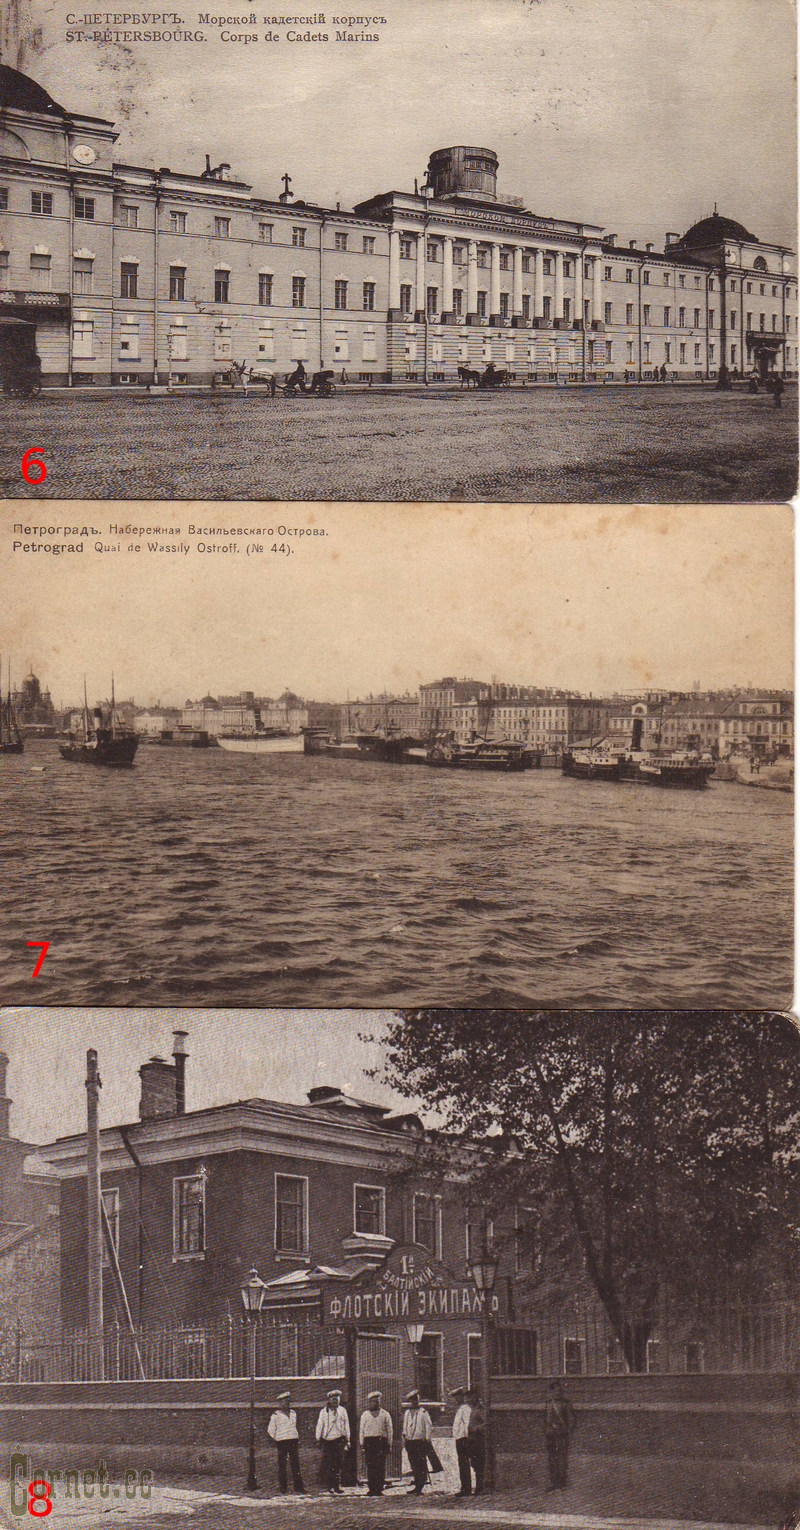 Marine Postcards